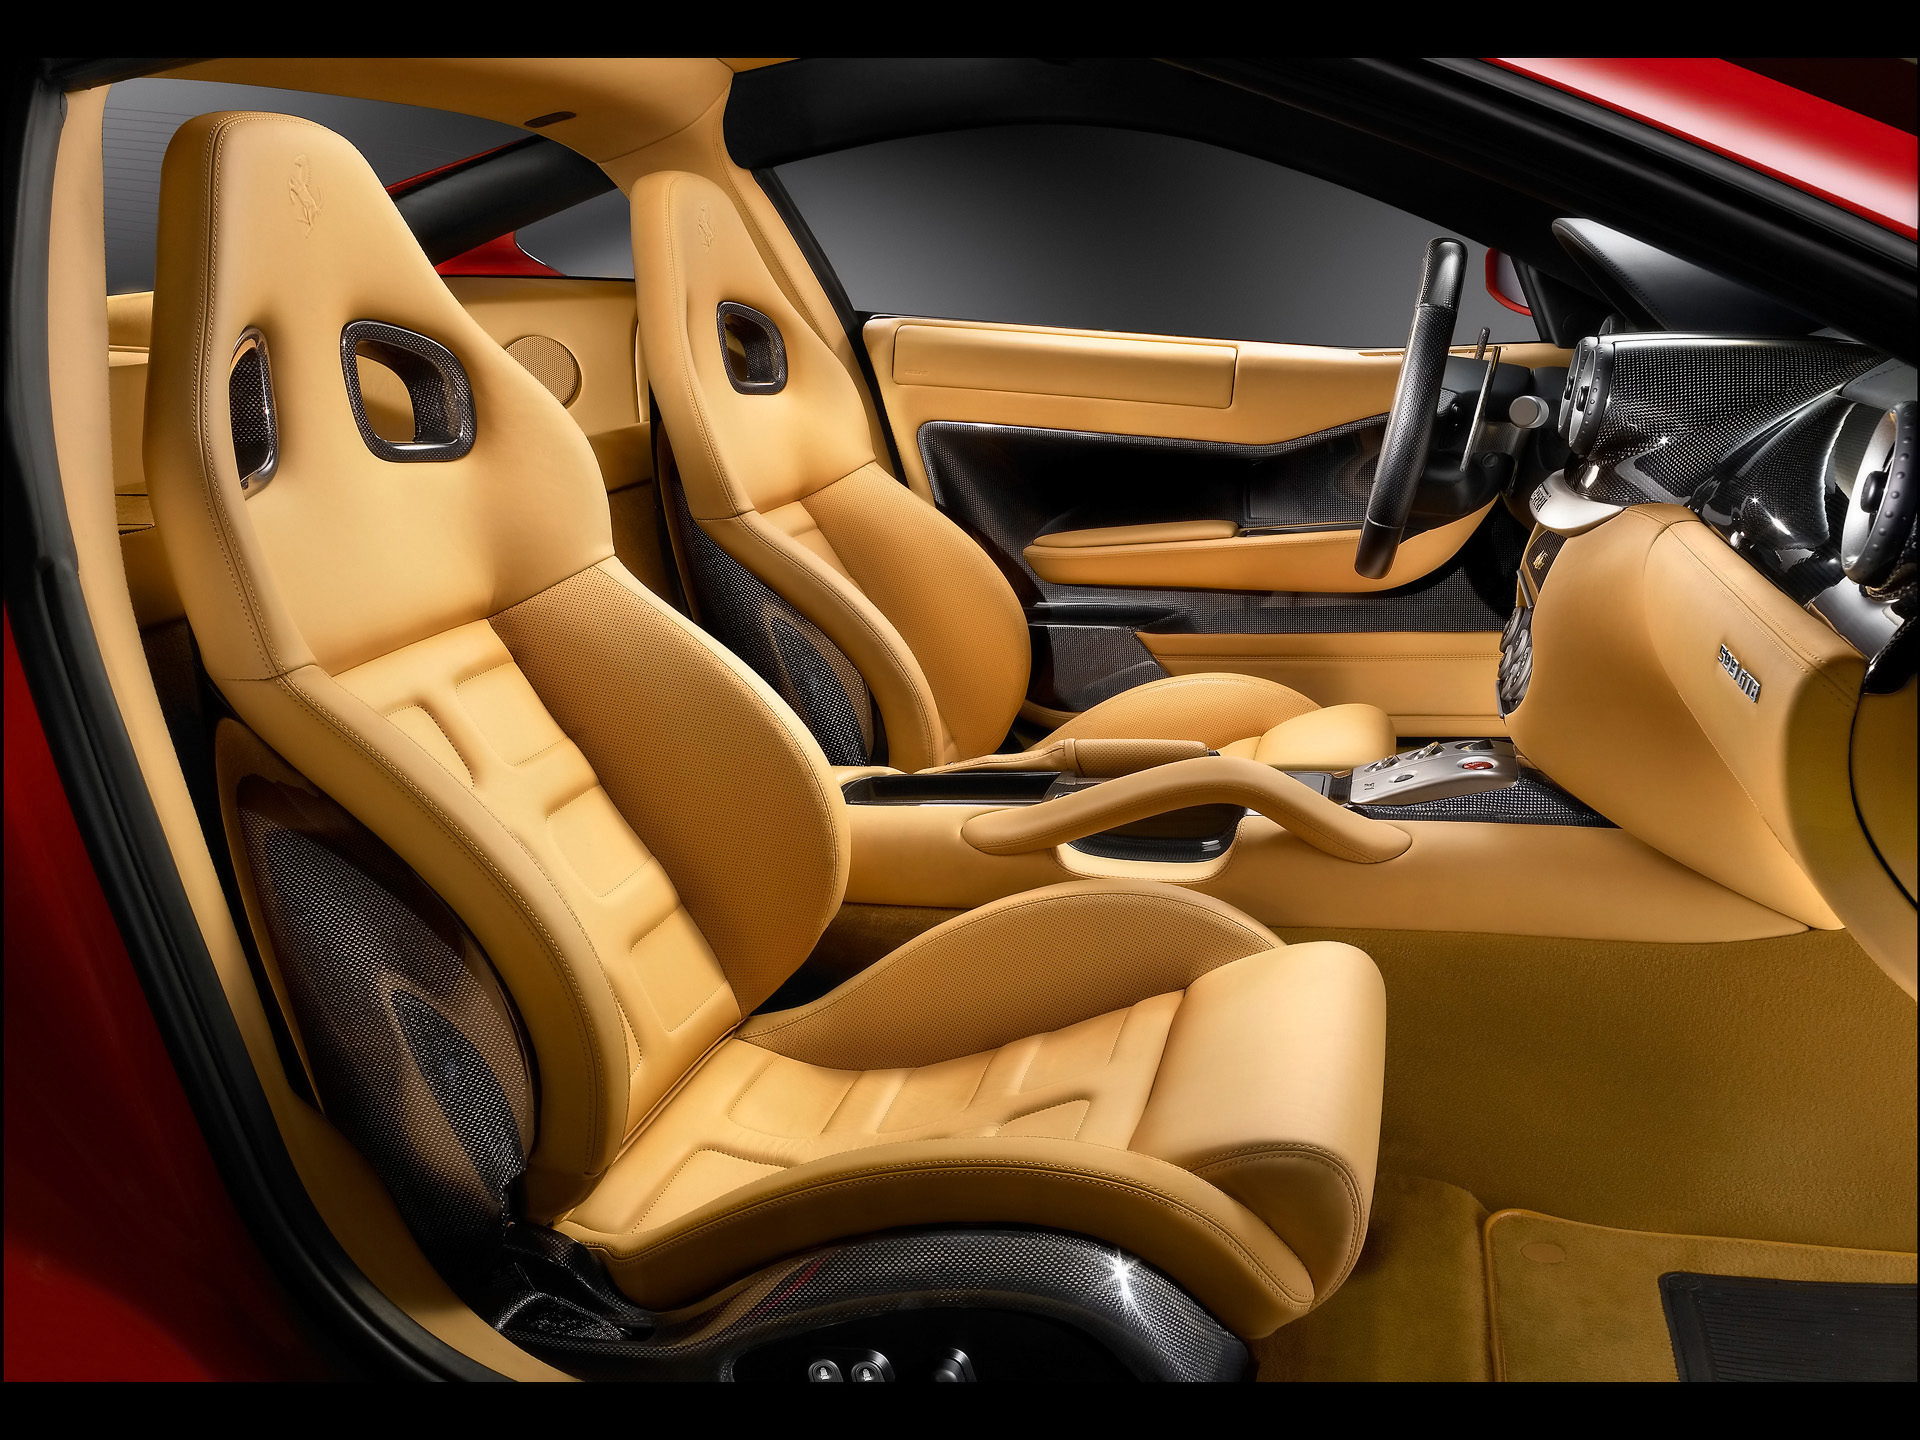 cars, vehicles, car interiors, Ferrari 599 GTB Fiorano - desktop wallpaper